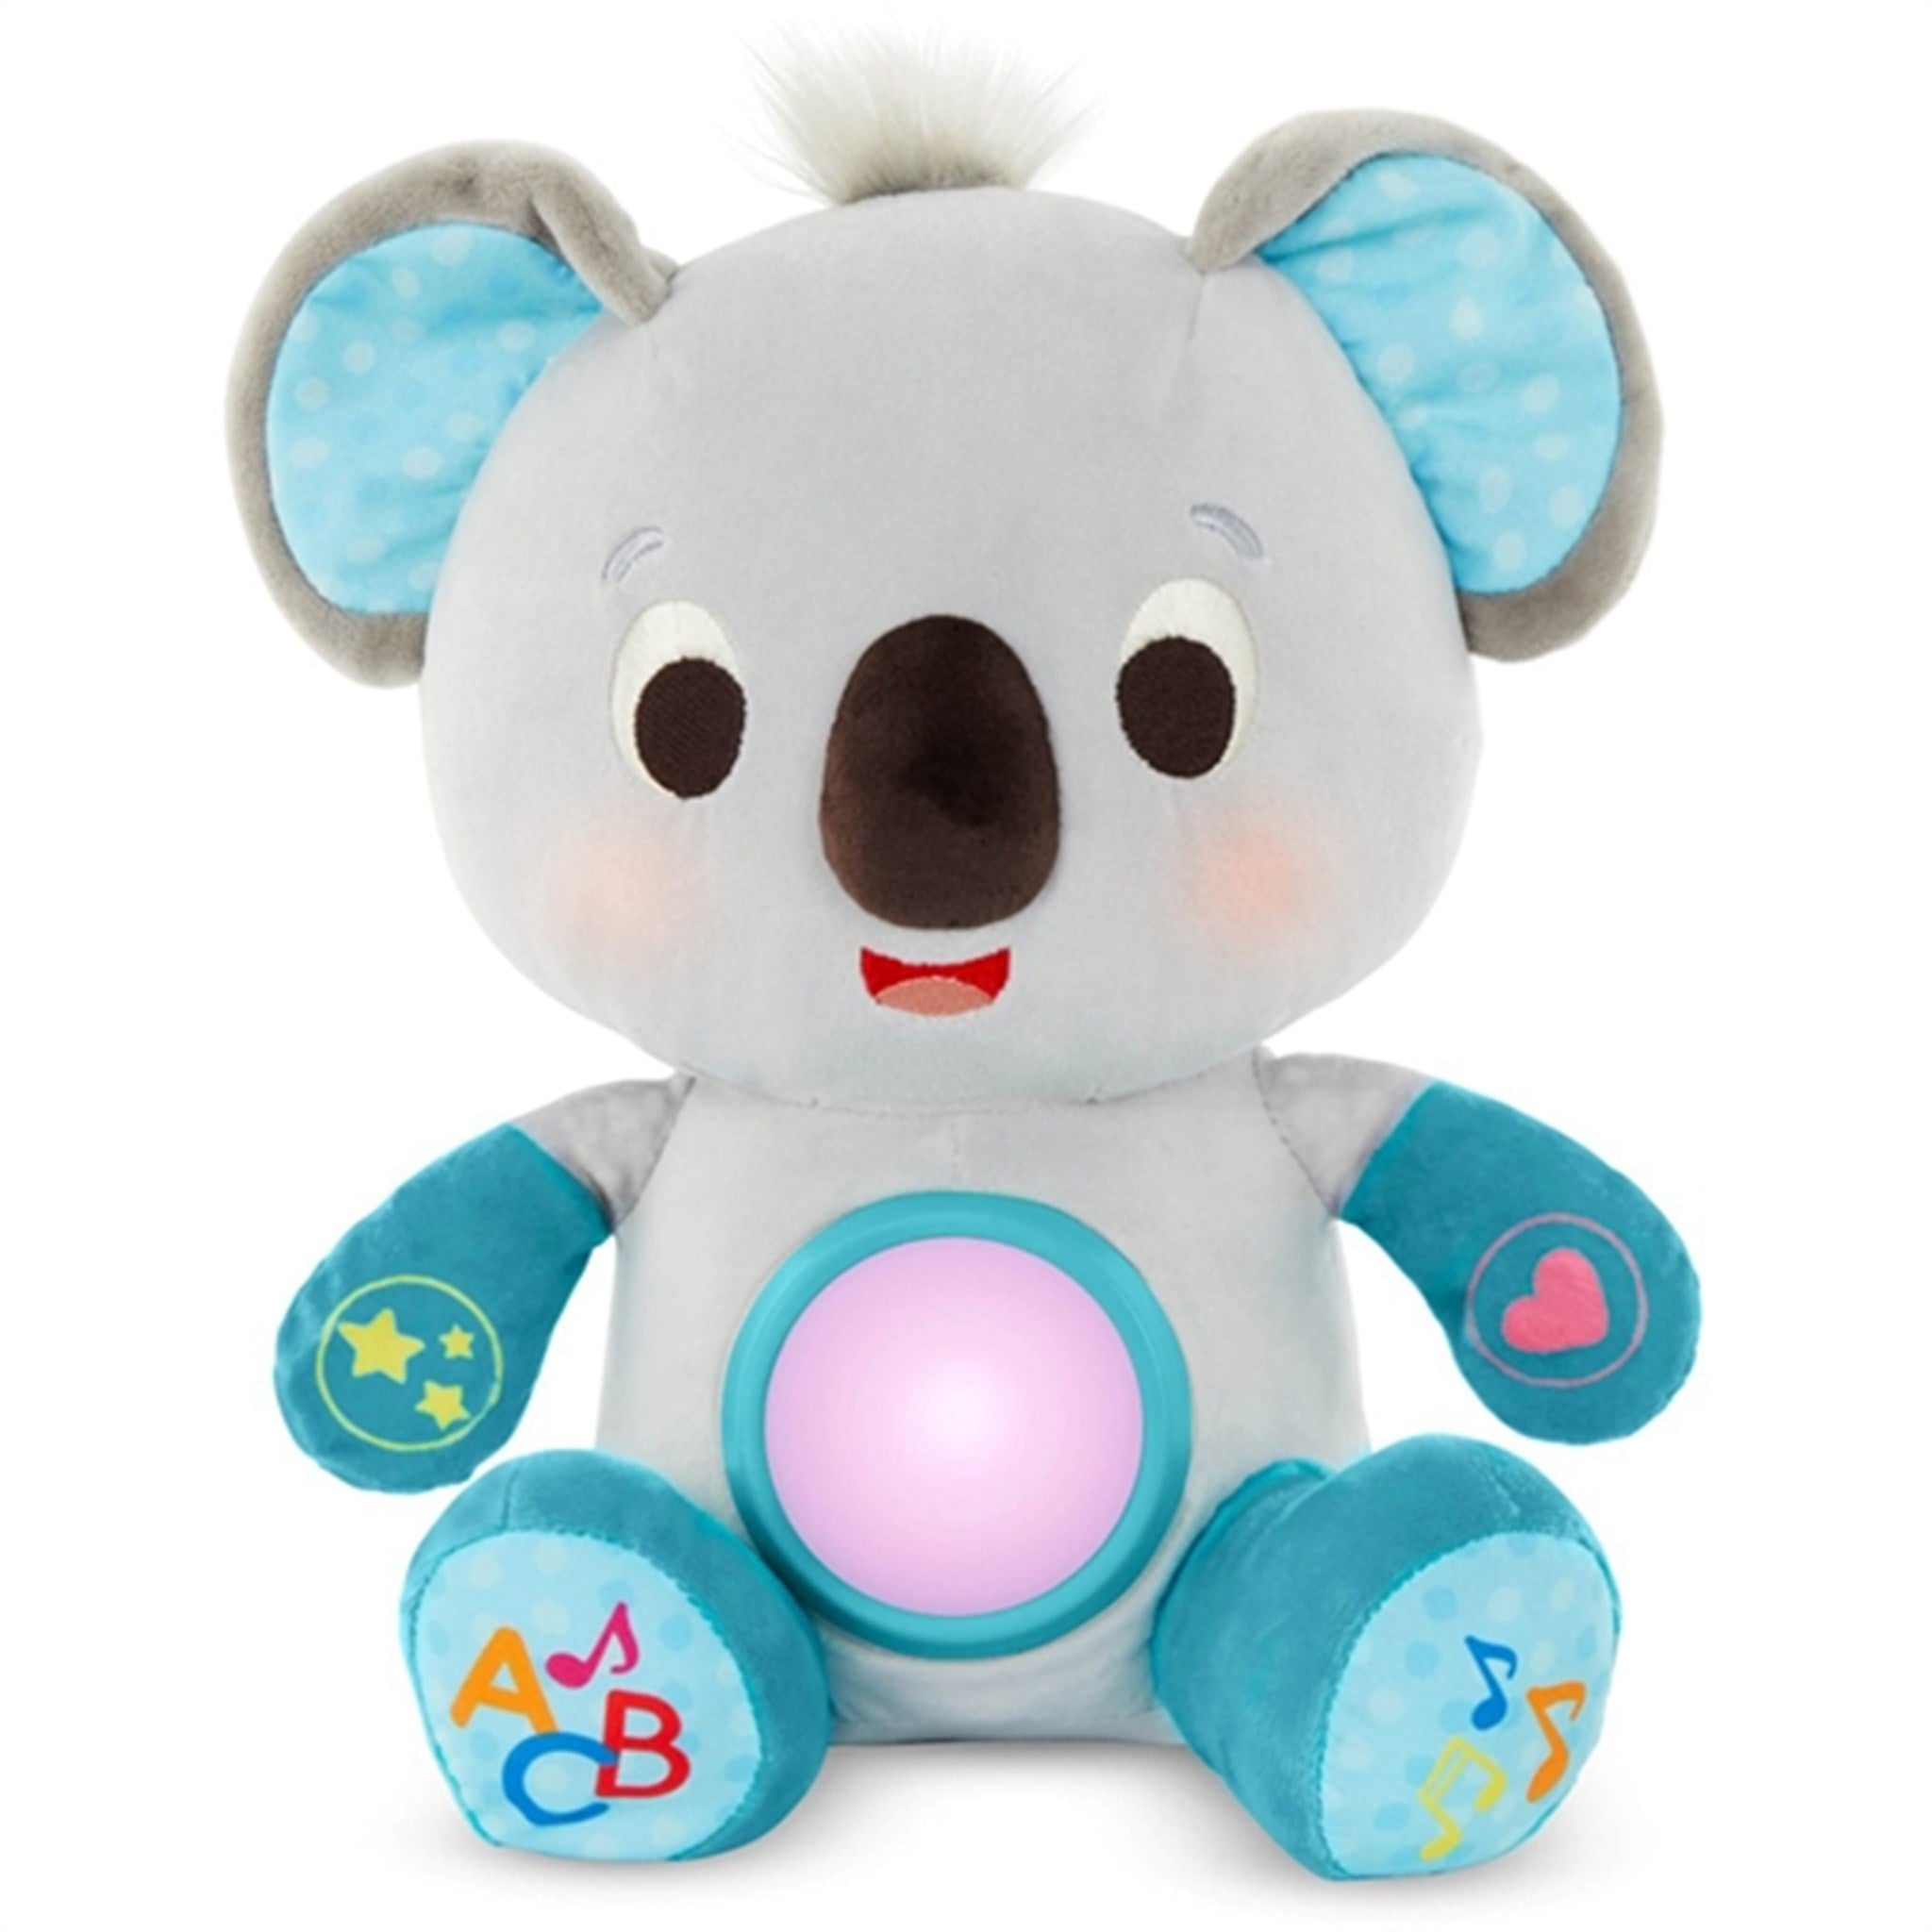 B-toys Talking Koala Interactive Plush Toy